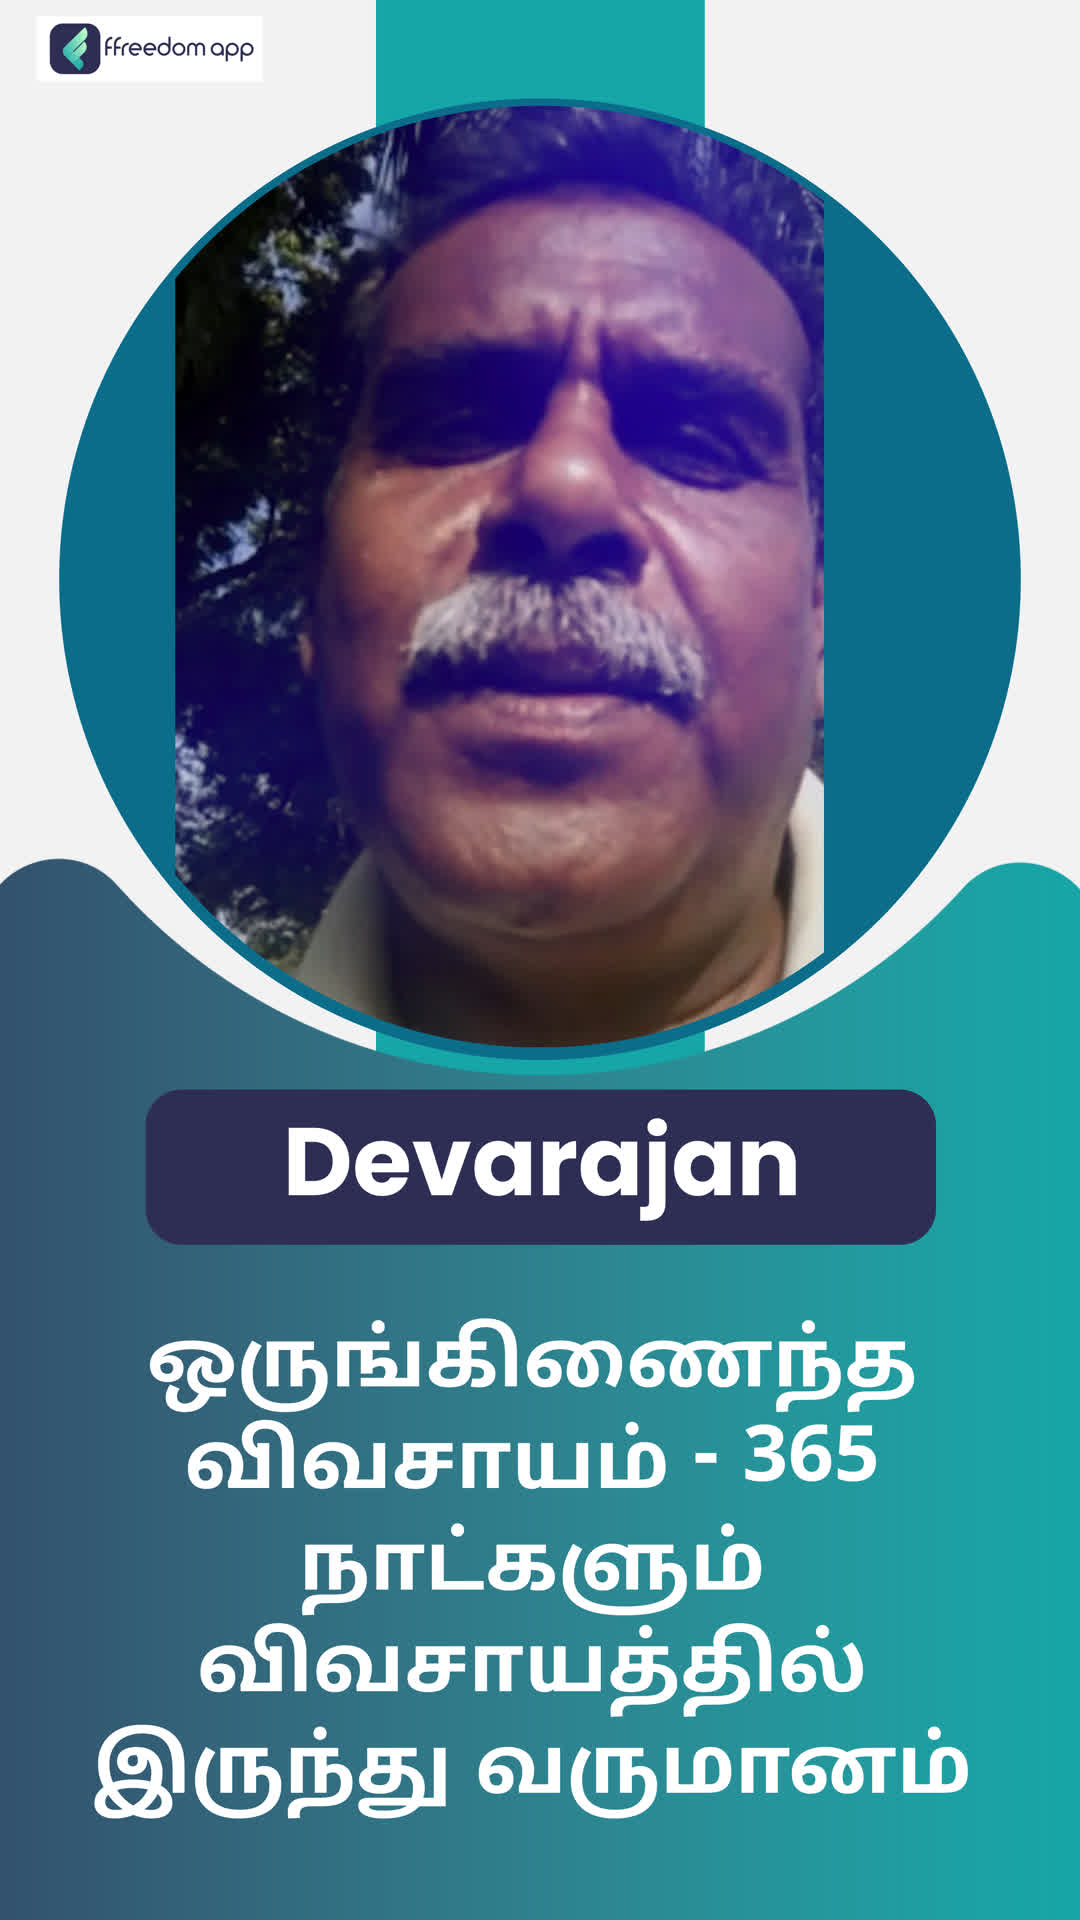 A.DEVARAJAN's Honest Review of ffreedom app - Tiruppur ,Tamil Nadu